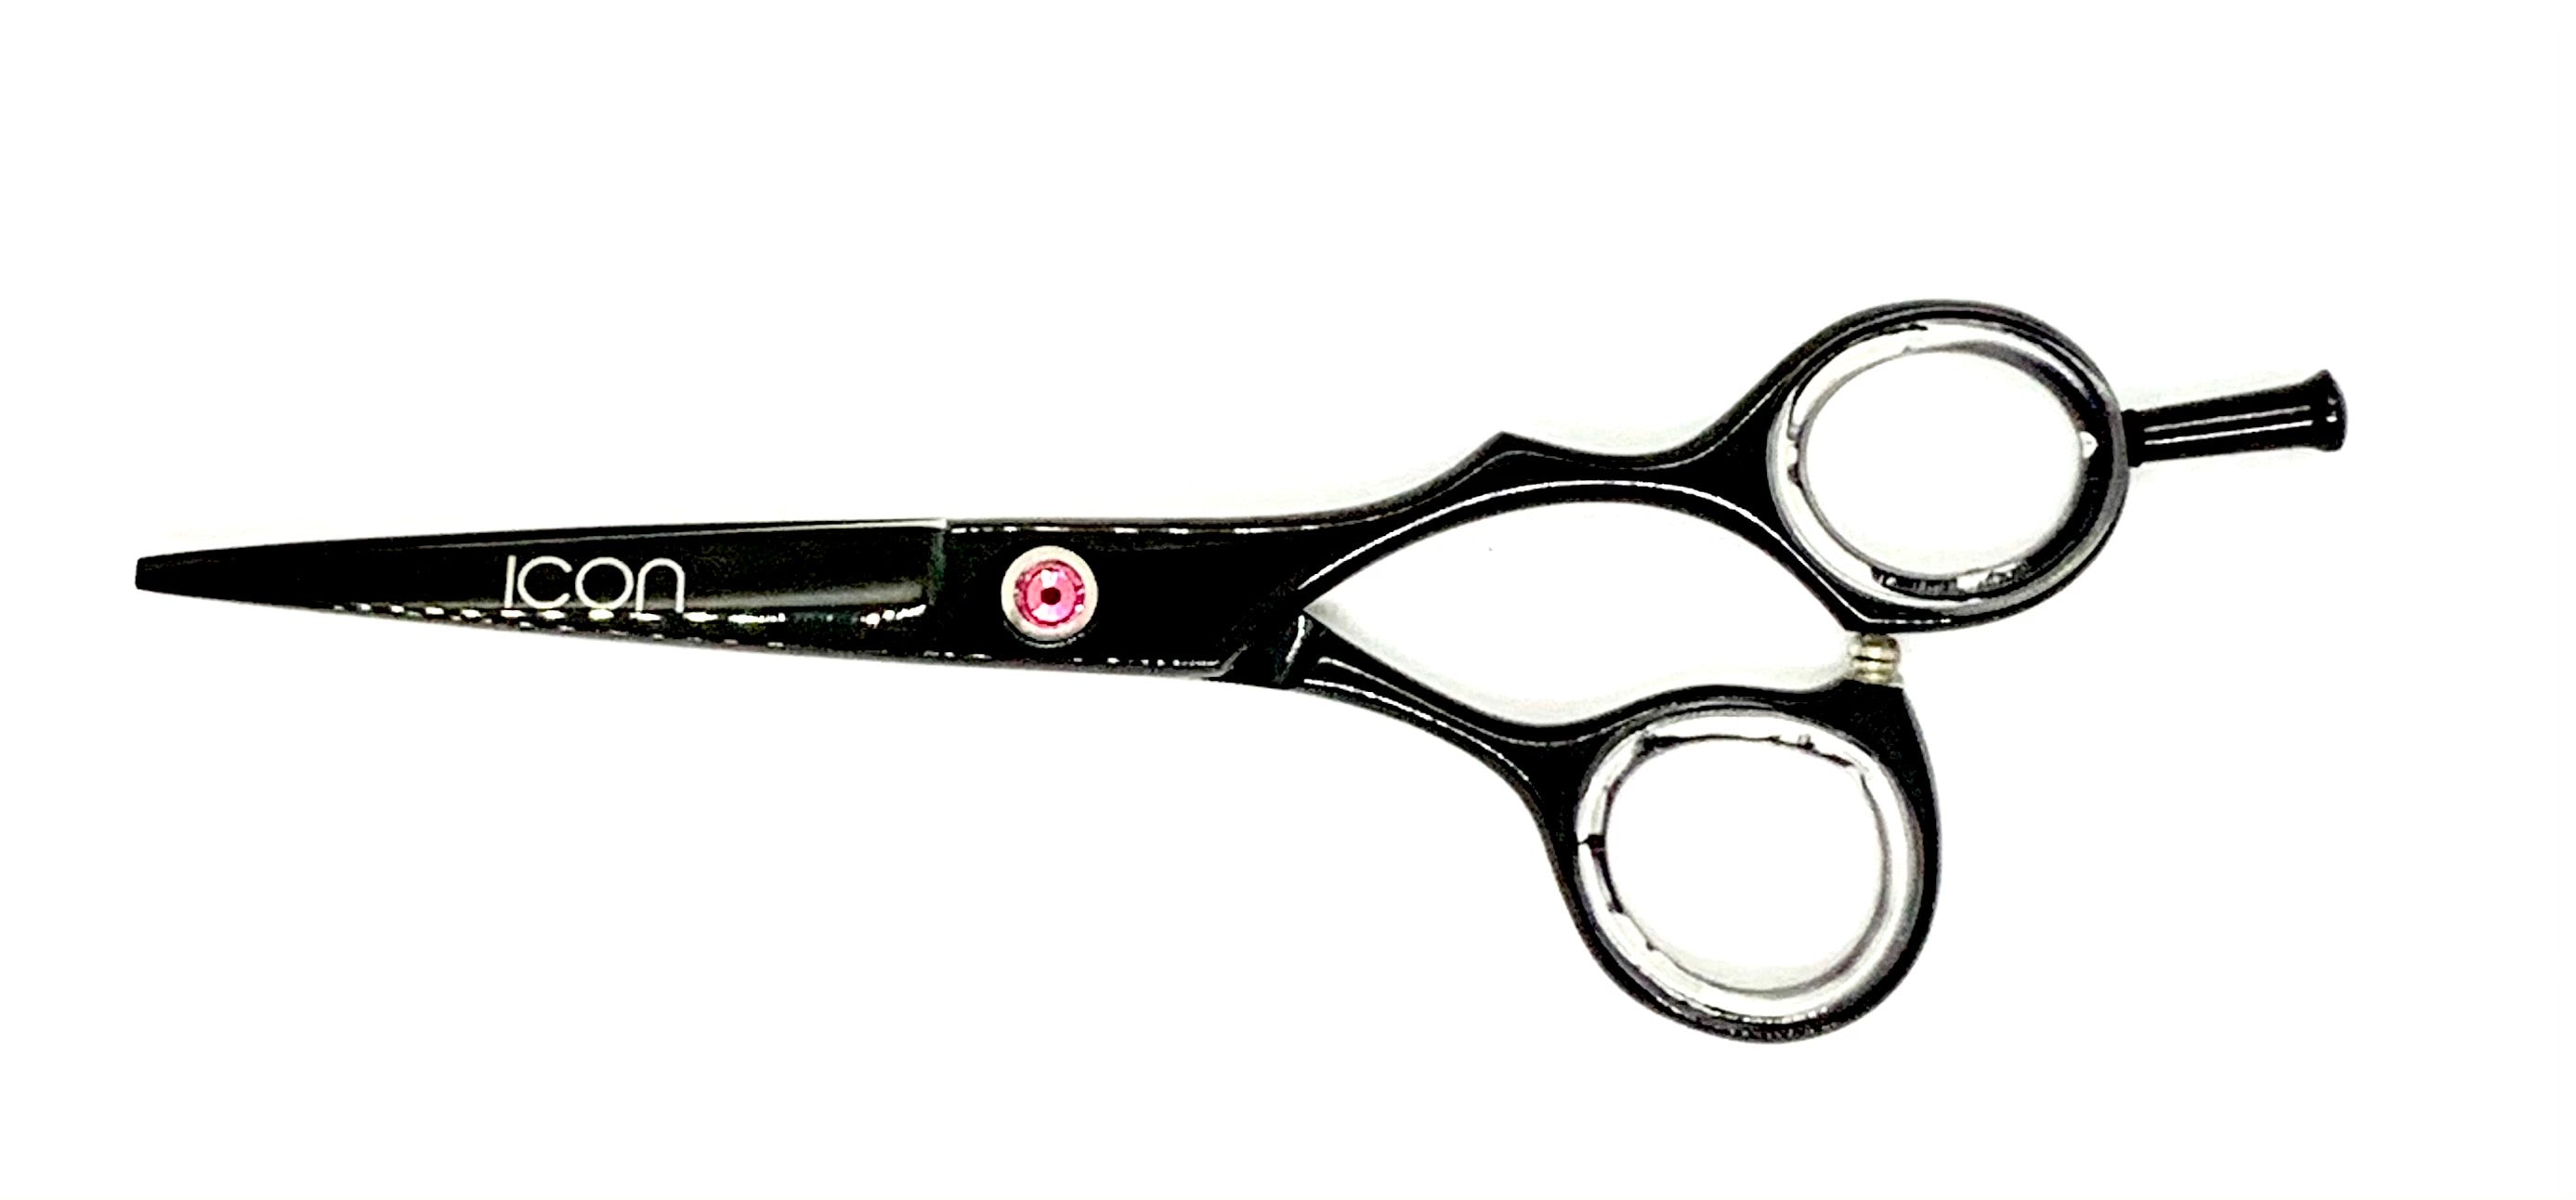 black point cutting hair shears hair salon hairstylist cosmetology scissors